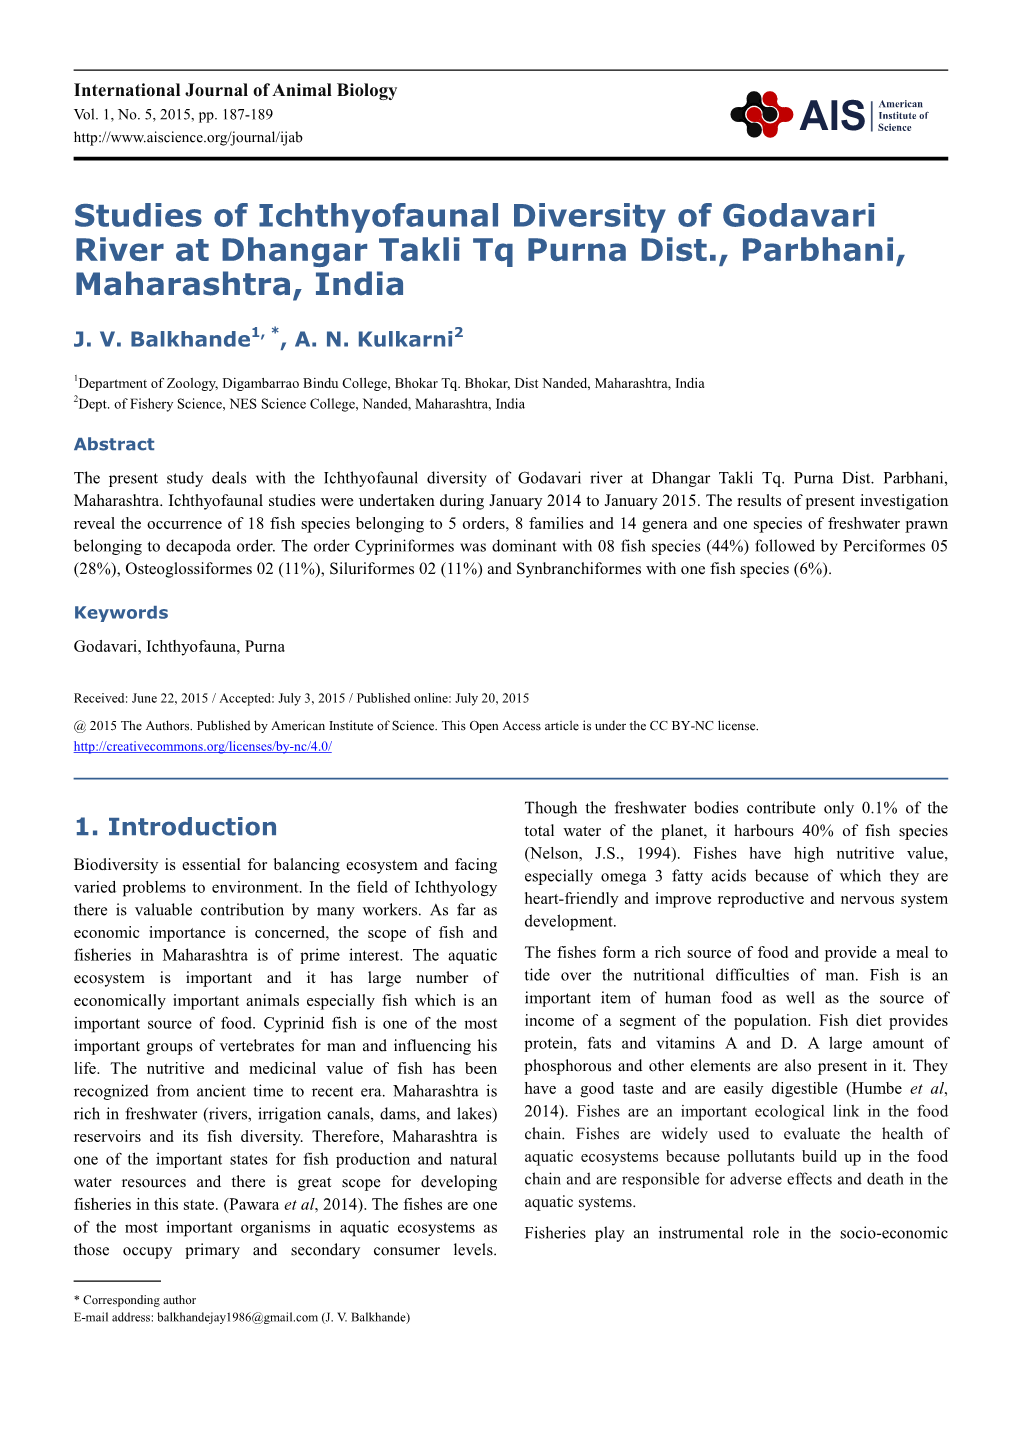 Studies of Ichthyofaunal Diversity of Godavari River at Dhangar Takli Tq Purna Dist., Parbhani, Maharashtra, India